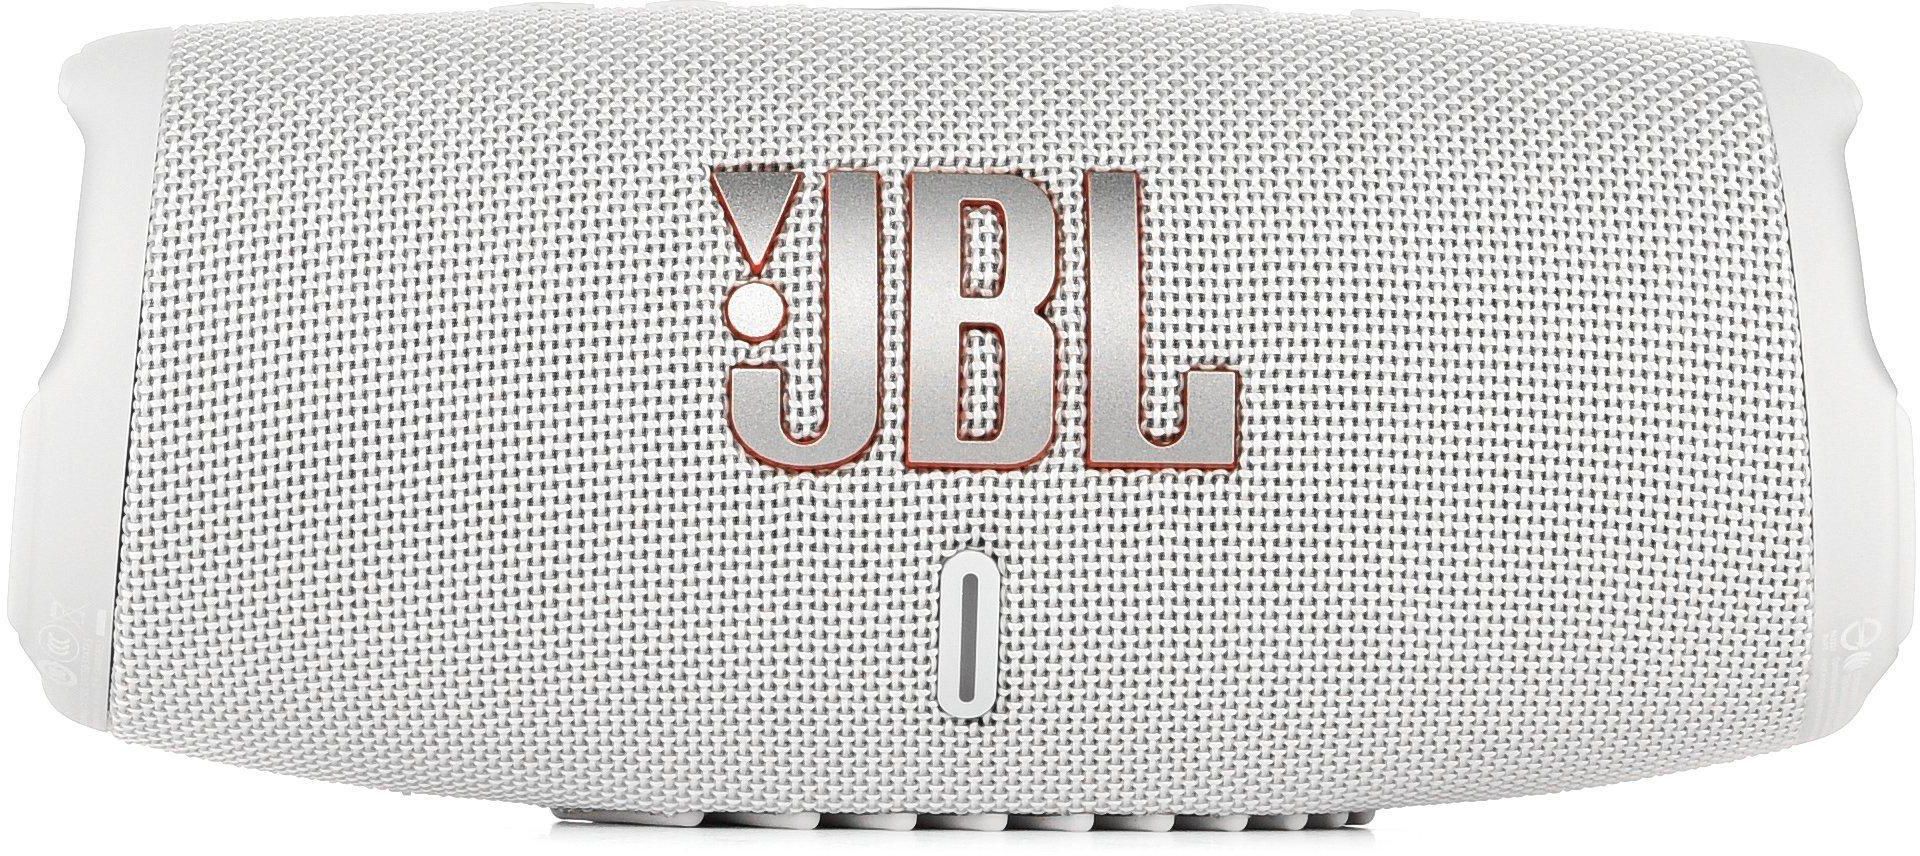 JBL CHARGE 5 Portable Bluetooth Speaker, White